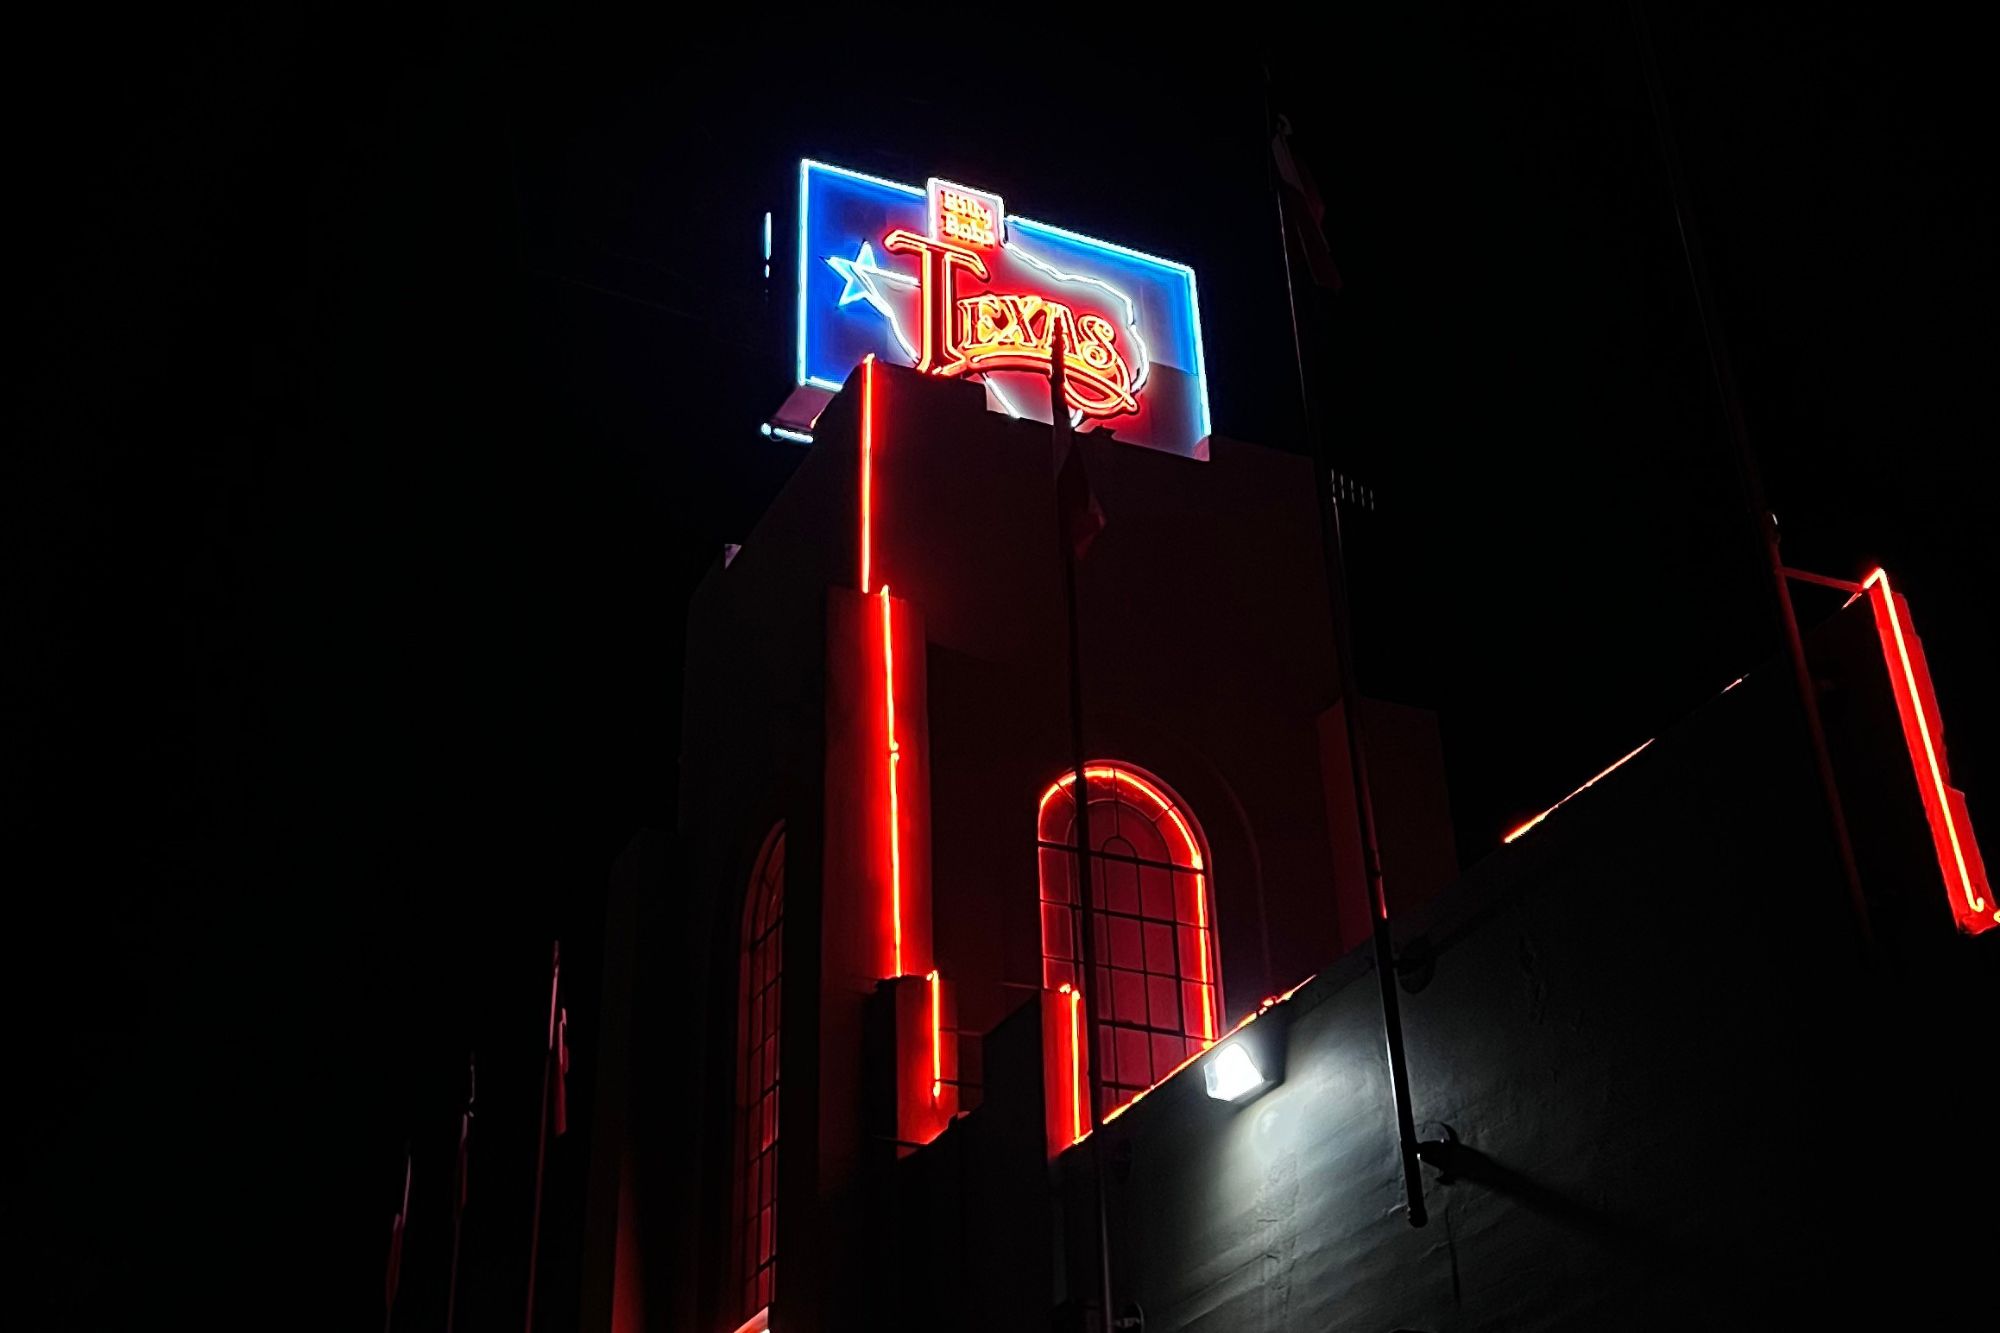 Billy Bob's Texas sign at night